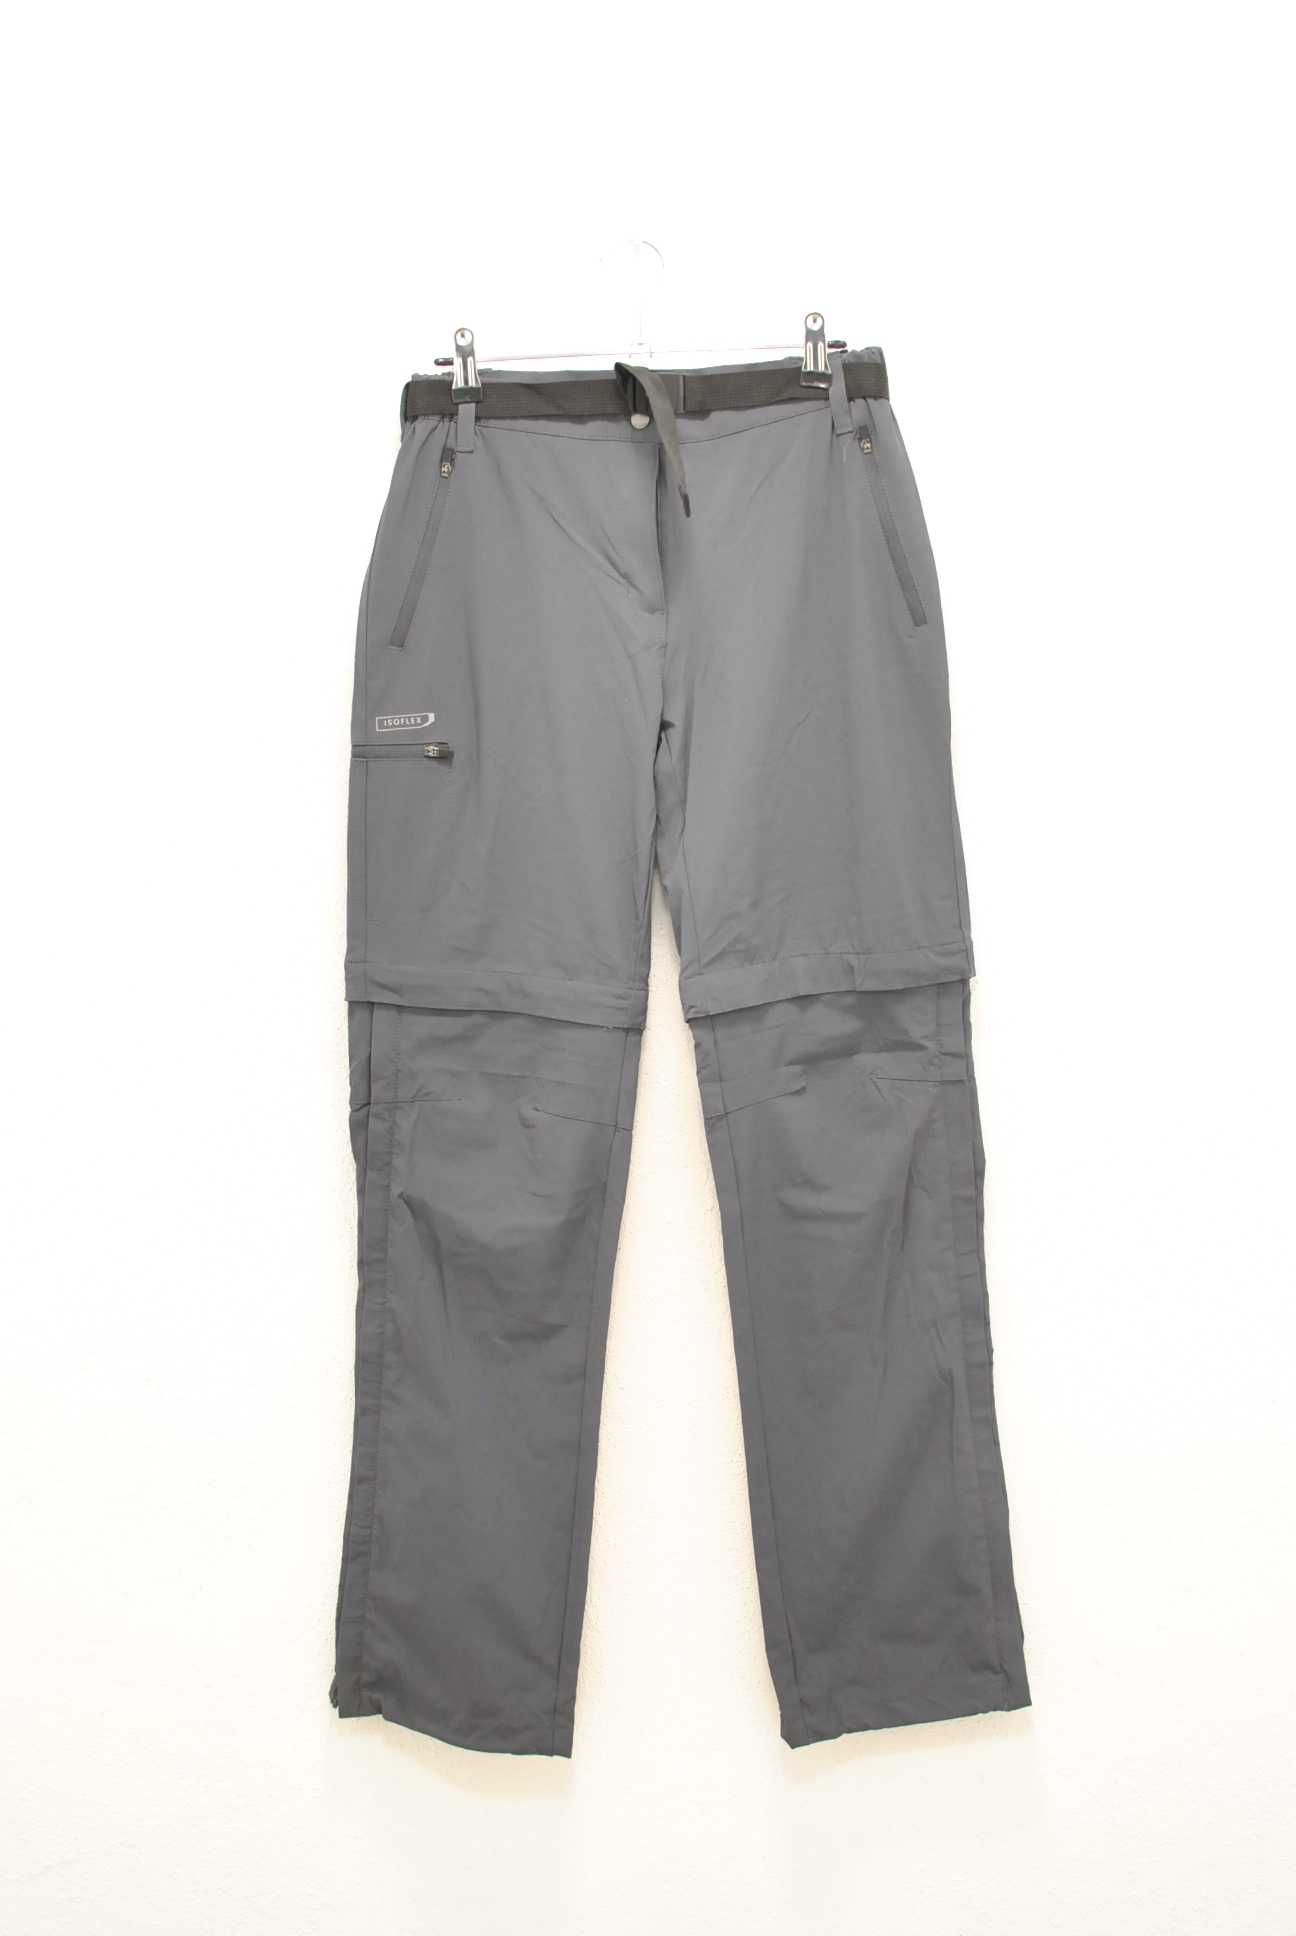 Regatta pantalon outdoor  soft shell elastic de femei mas 36  (VO185)